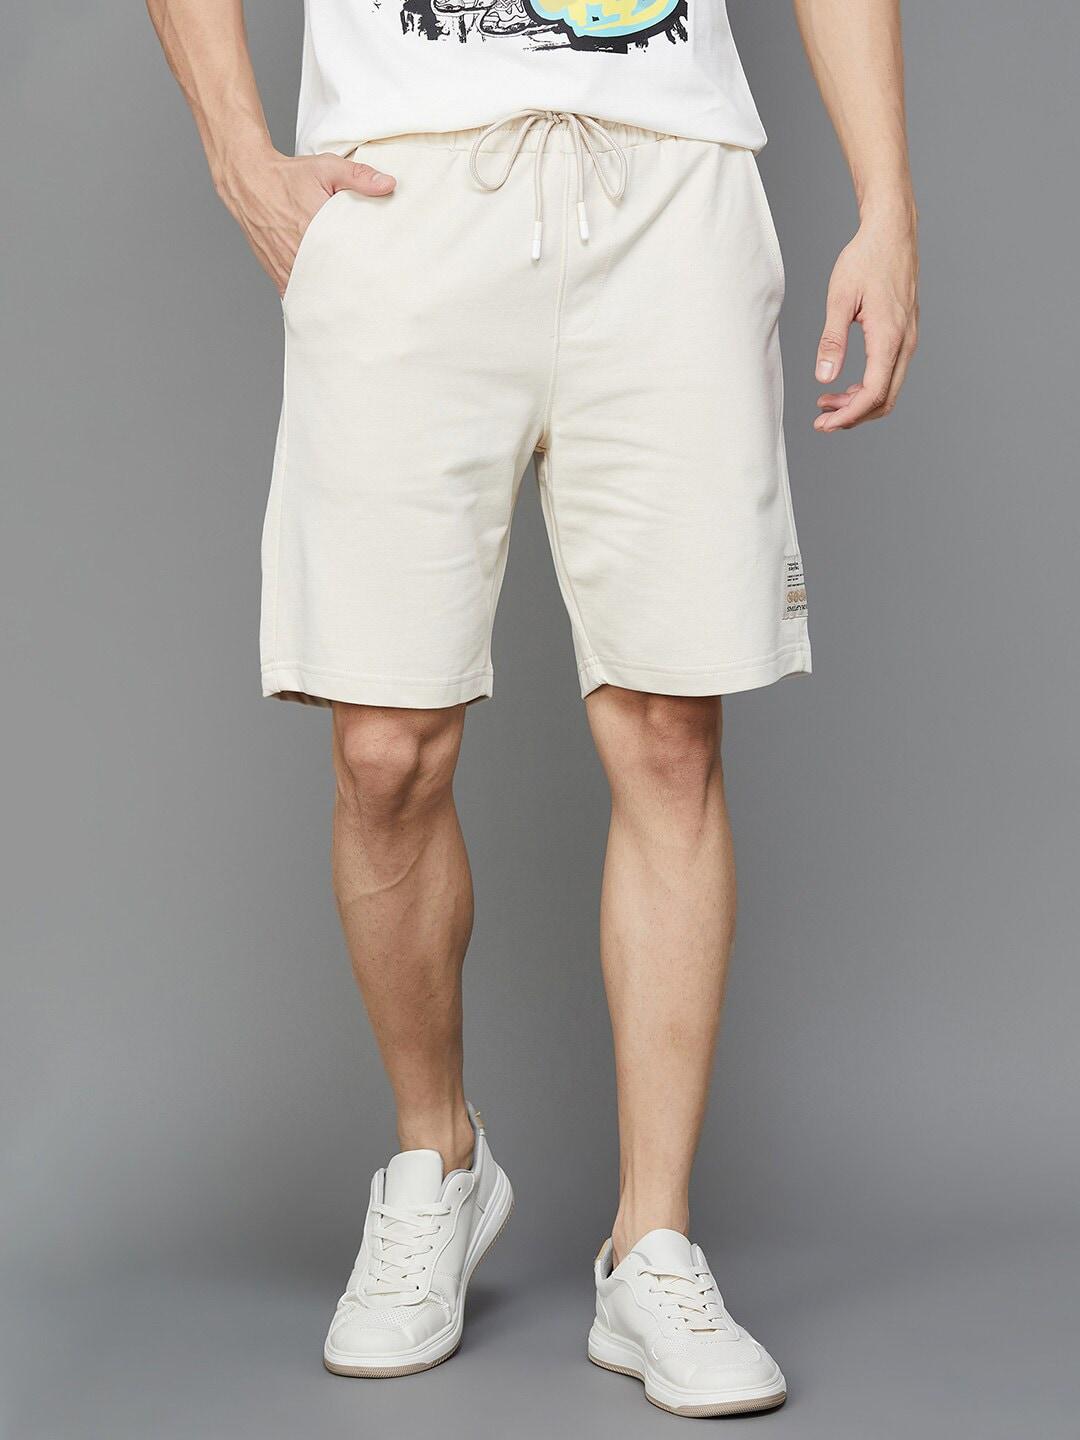 smileyworld-men-mid-rise-shorts